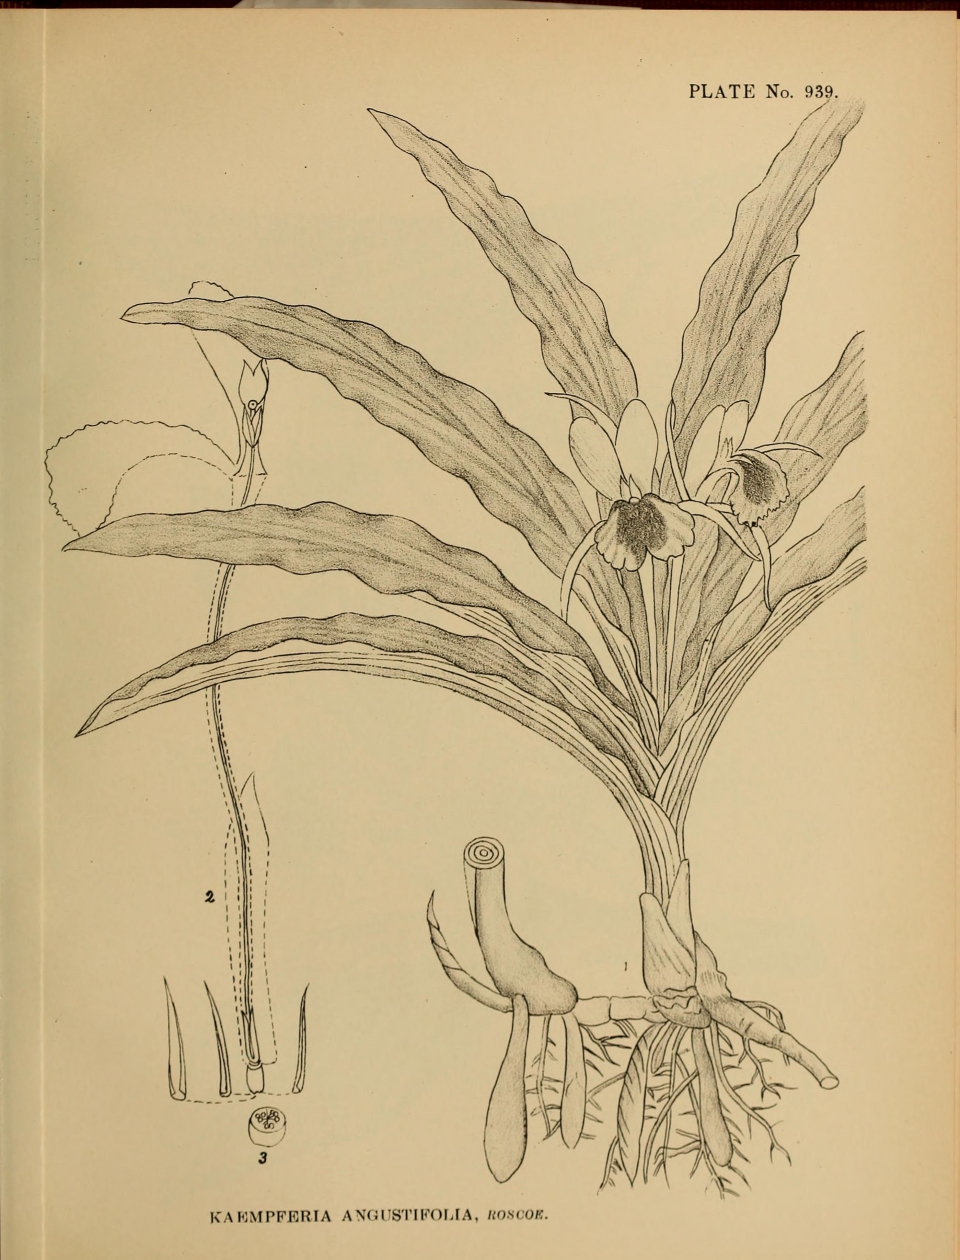 Kaempferia angustifolia